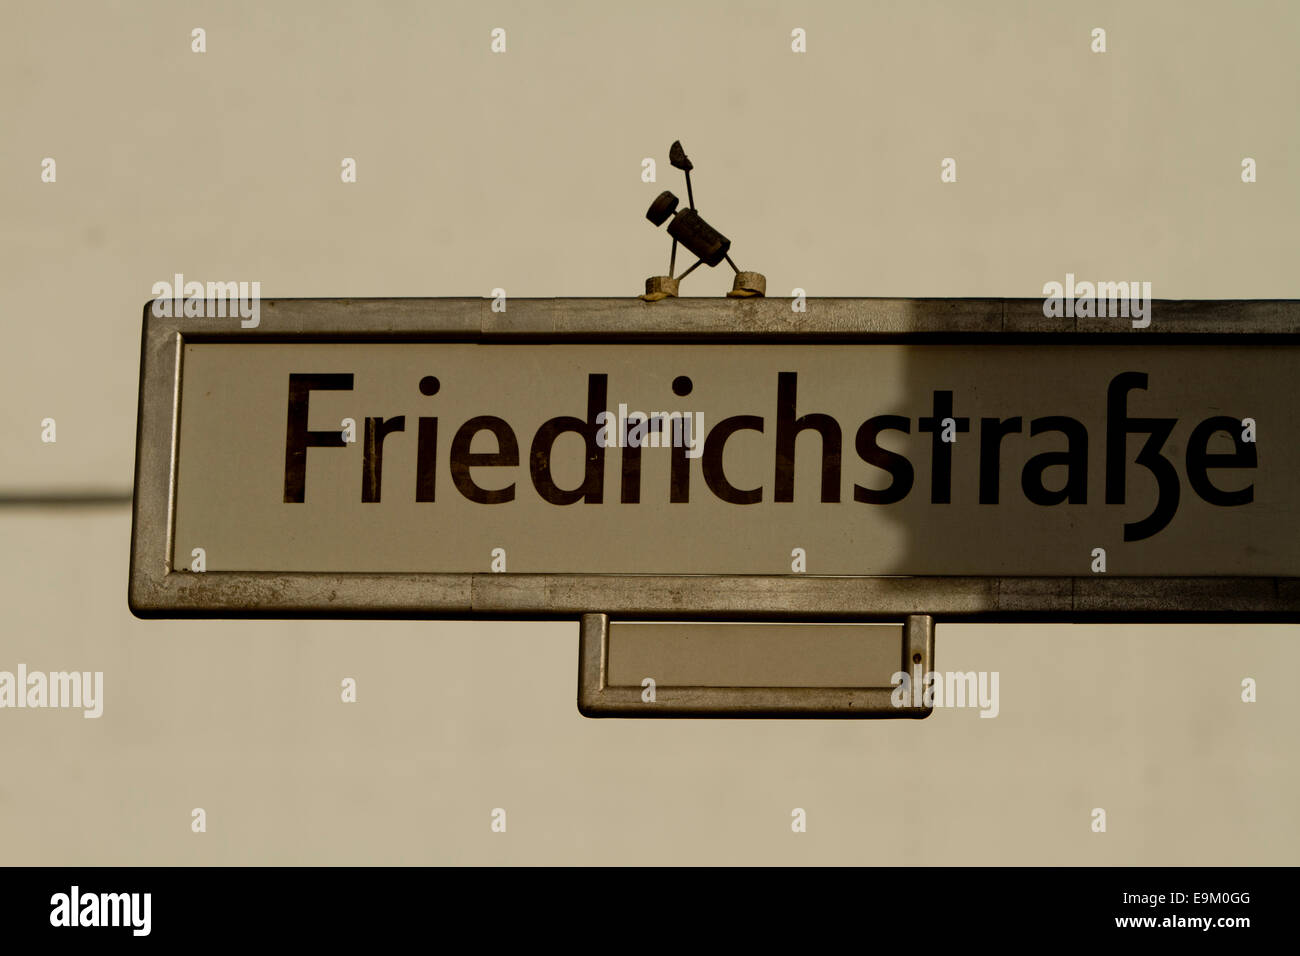 Friedrichstraza Berlin street sign character Stock Photo